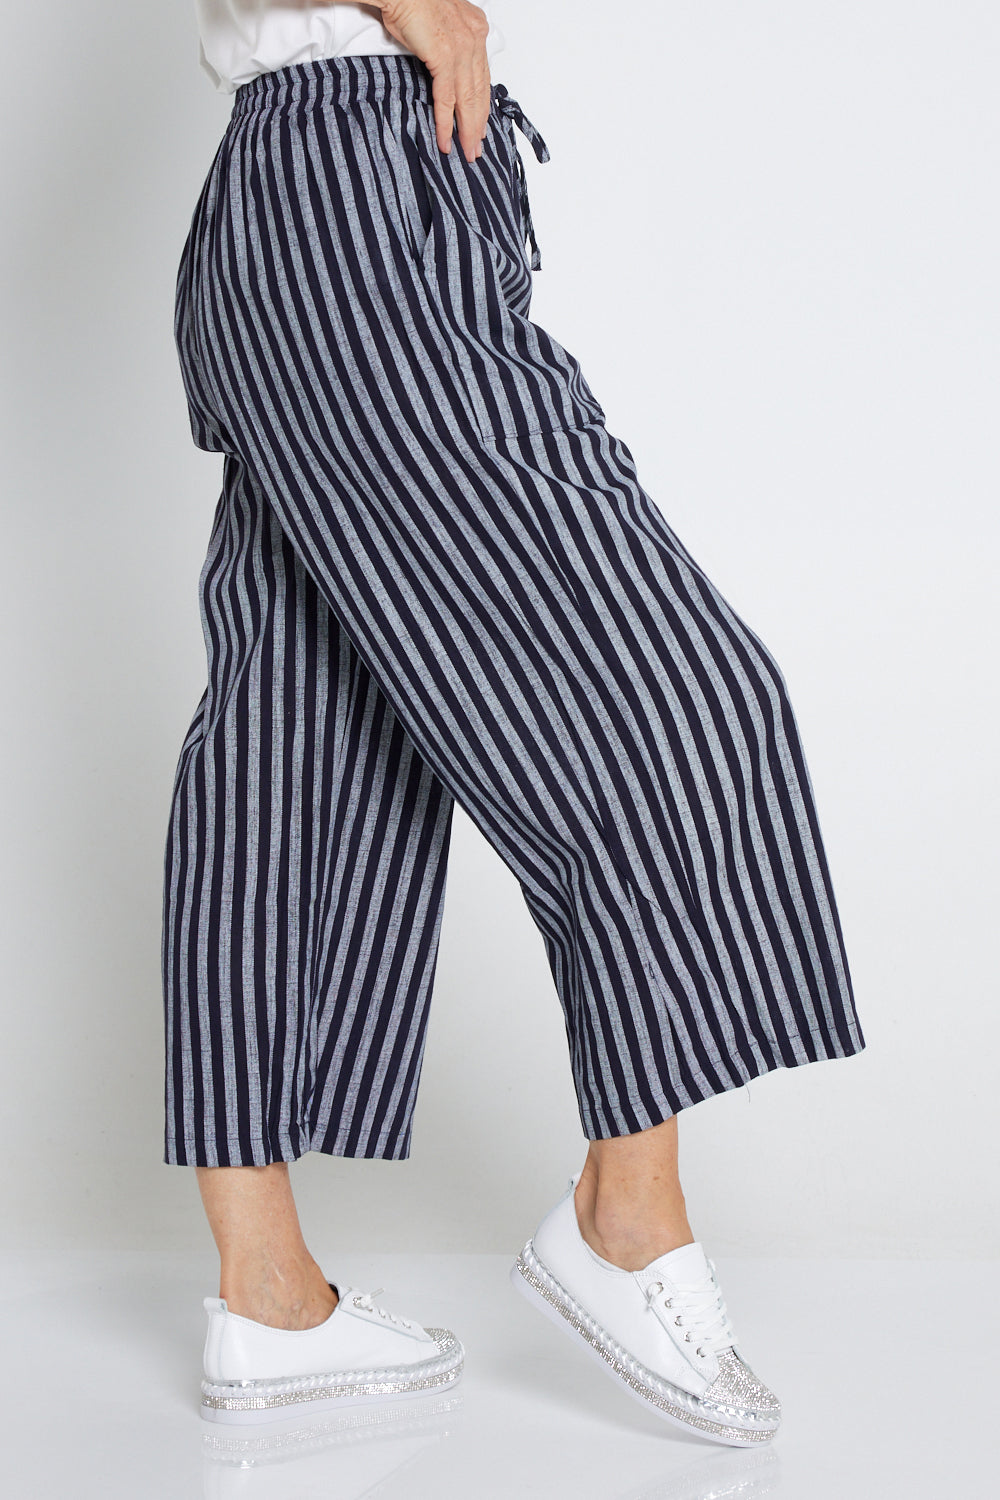 Aiko Linen Pants - Navy Stripe